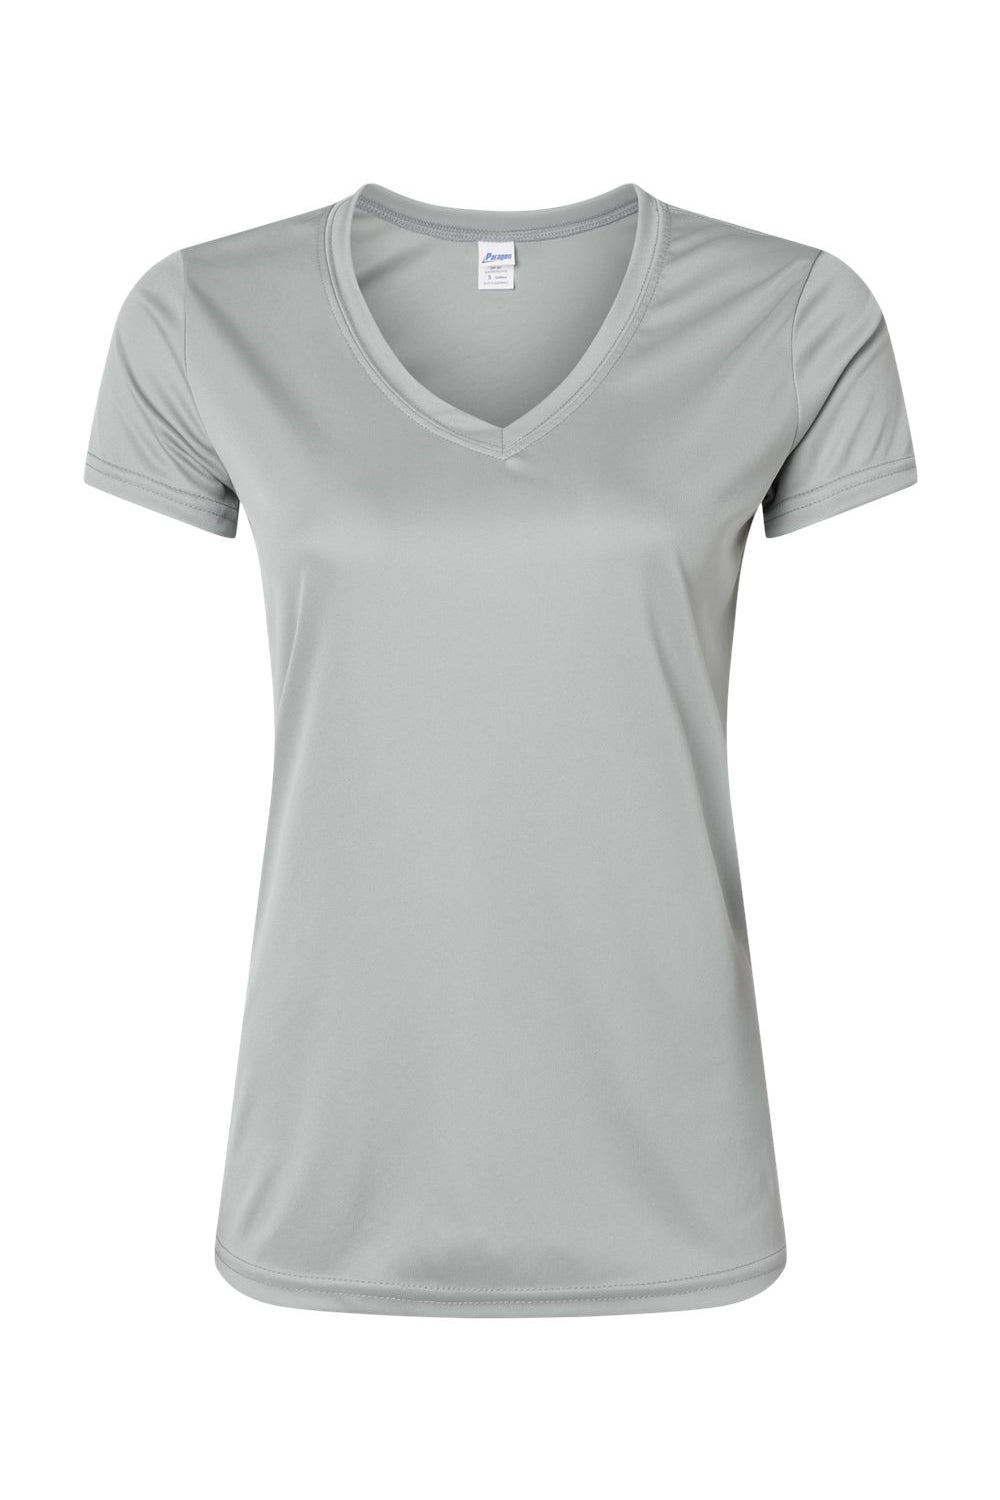 Paragon 203 Womens Vera Short Sleeve V-Neck T-Shirt Medium Grey Flat Front